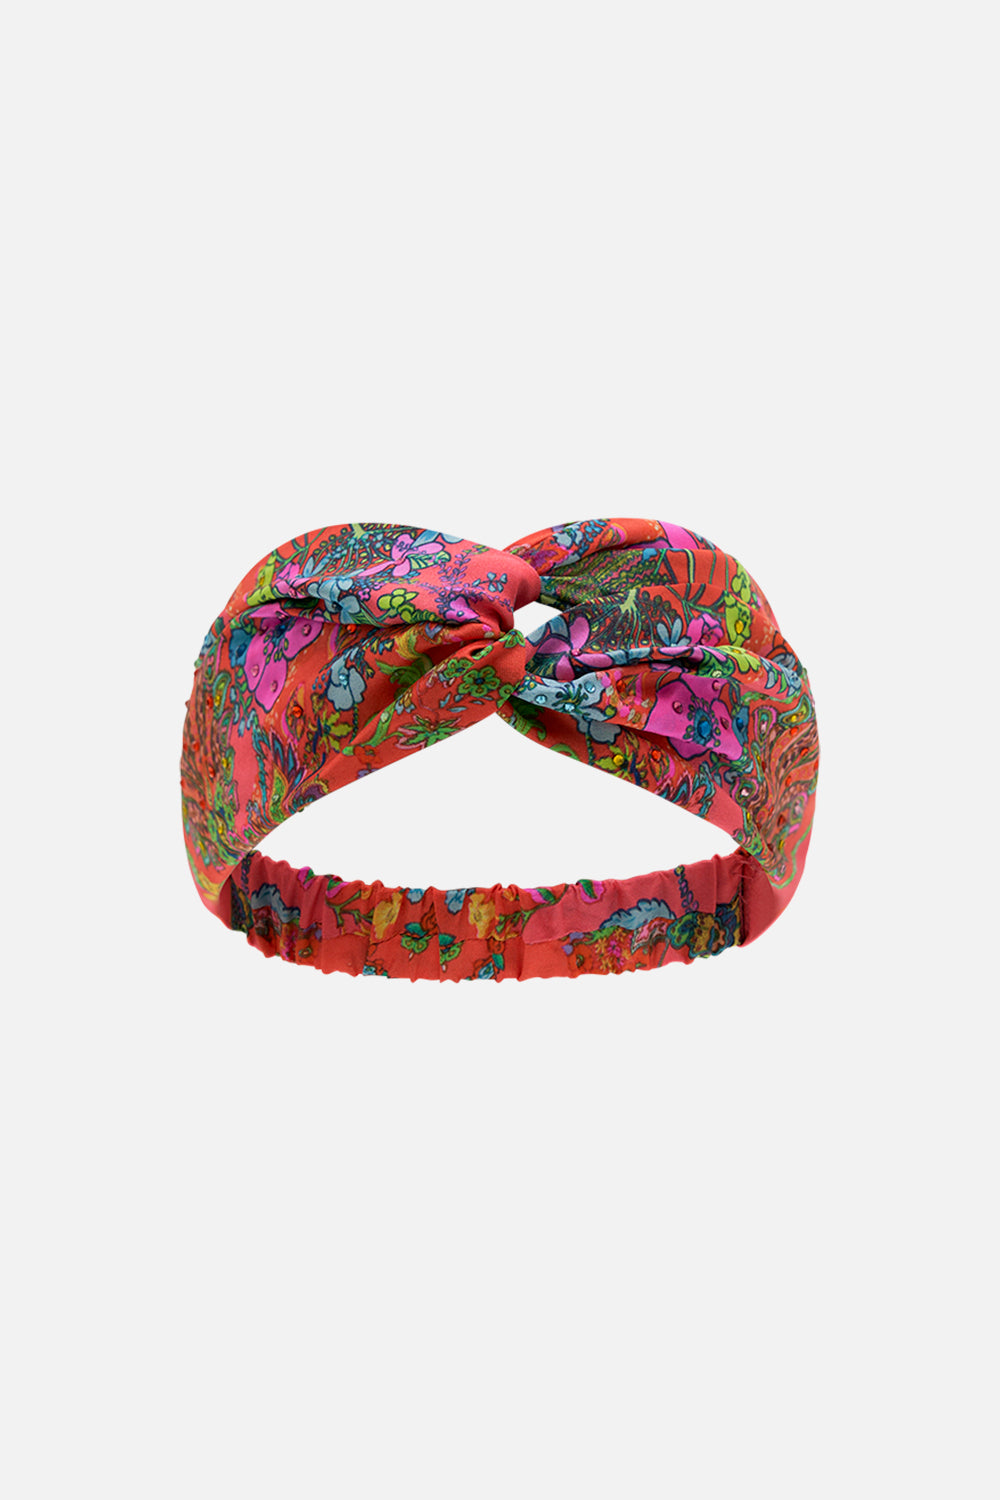 CAMILLA Pink Woven Twist Headband in Windmills and Wildflowers print